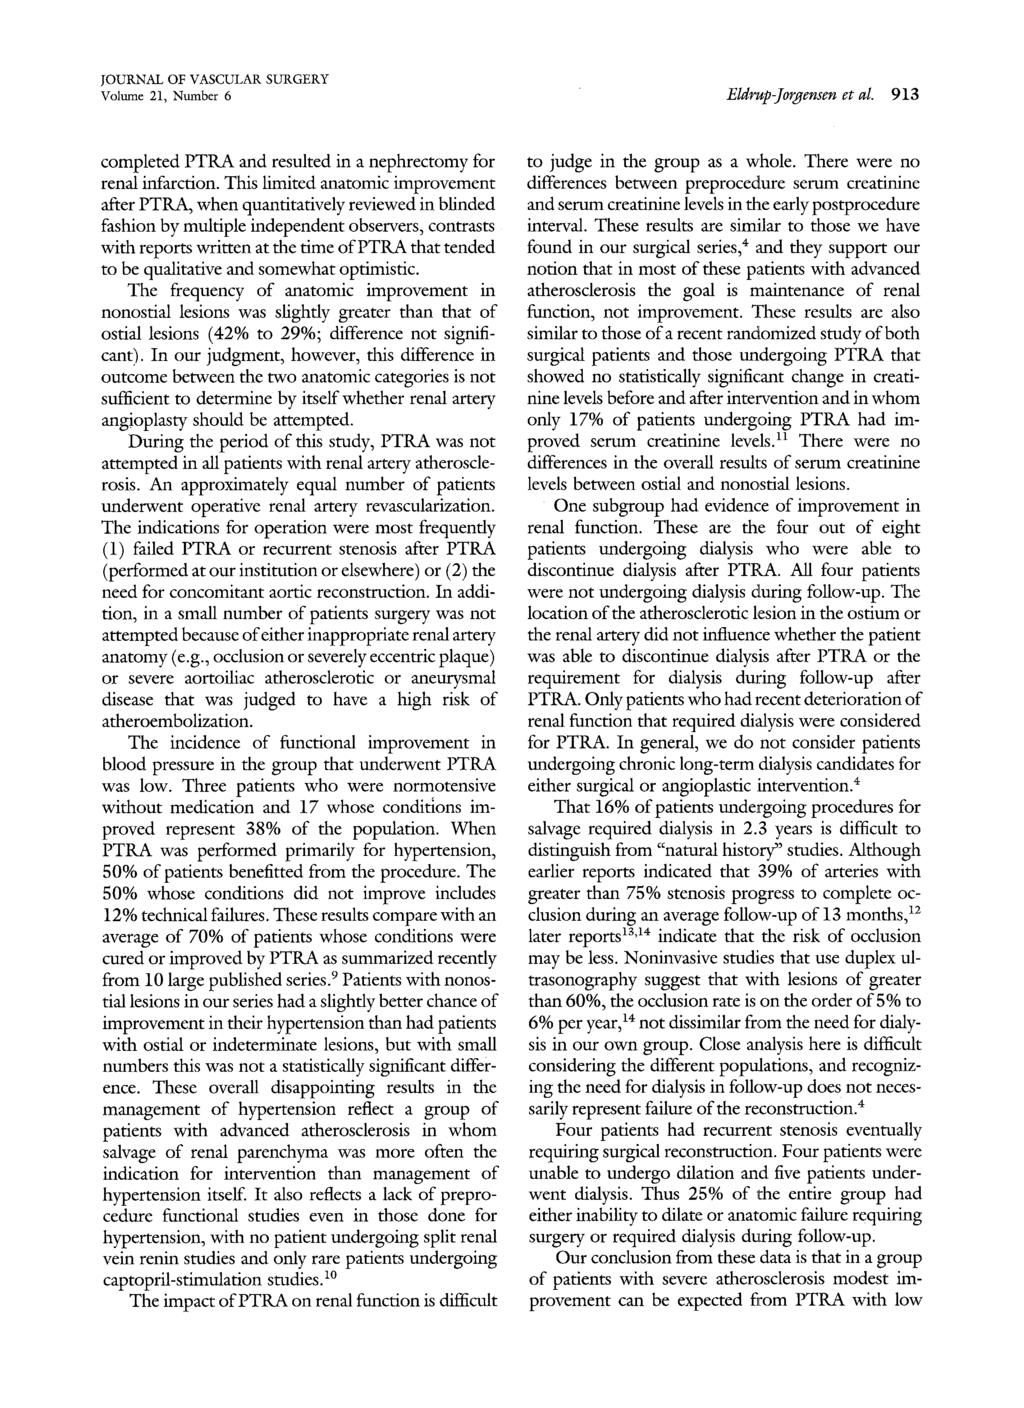 Volume 21, Number 6 Eldrup-Jorgensen et al. 913 completed PTRA and resulted in a nephrectomy for renal infarction.